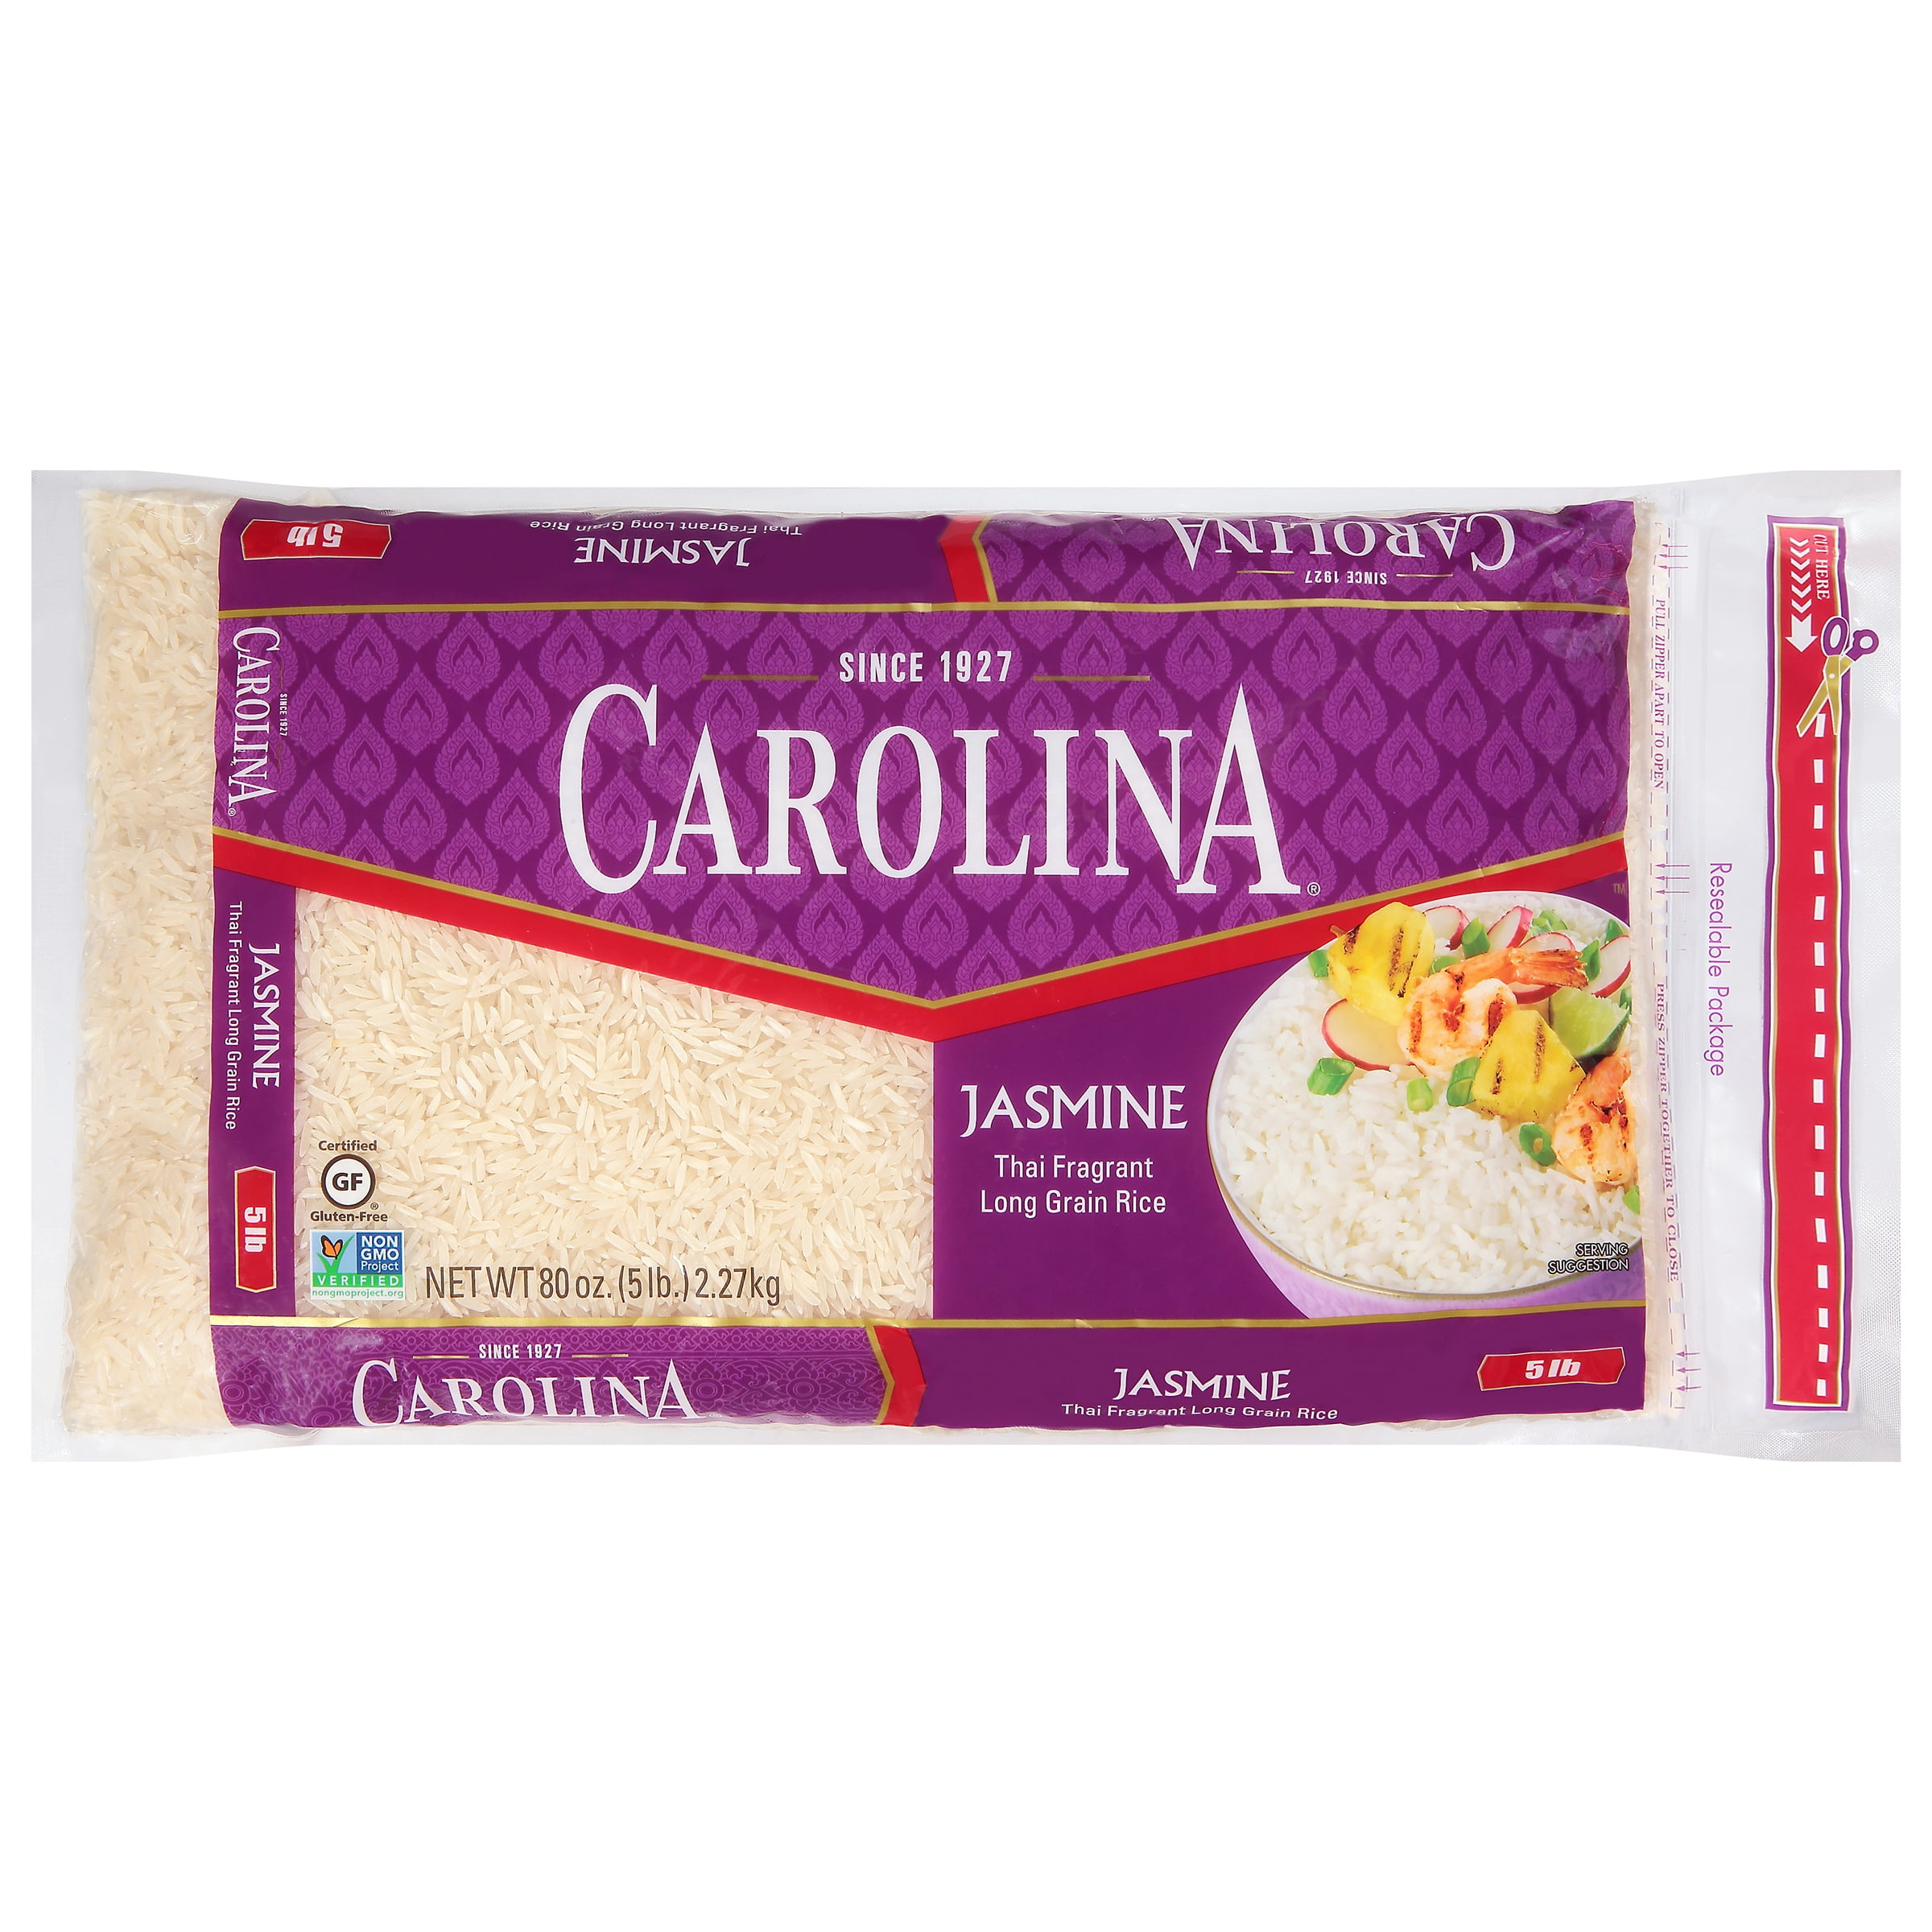 Carolina Jasmine White Rice, Thai Fragrant Long Grain Rice, 5 lb Bag